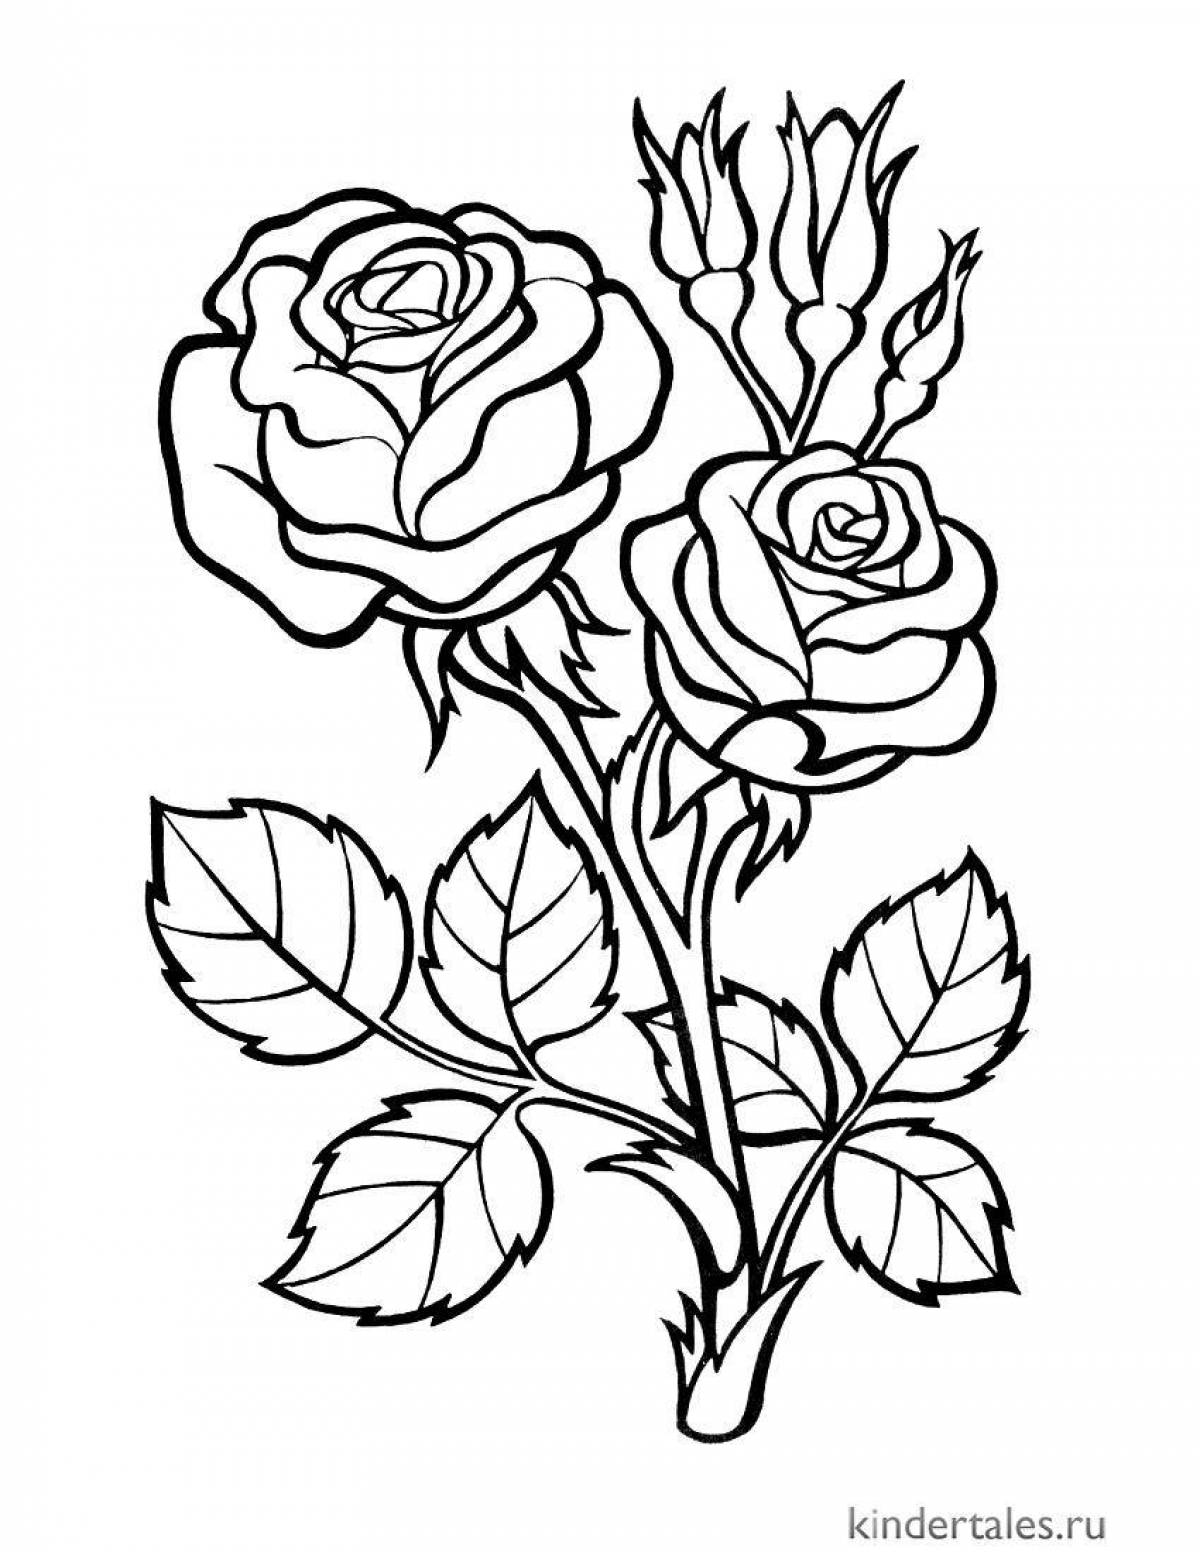 Exquisite rose flower coloring book